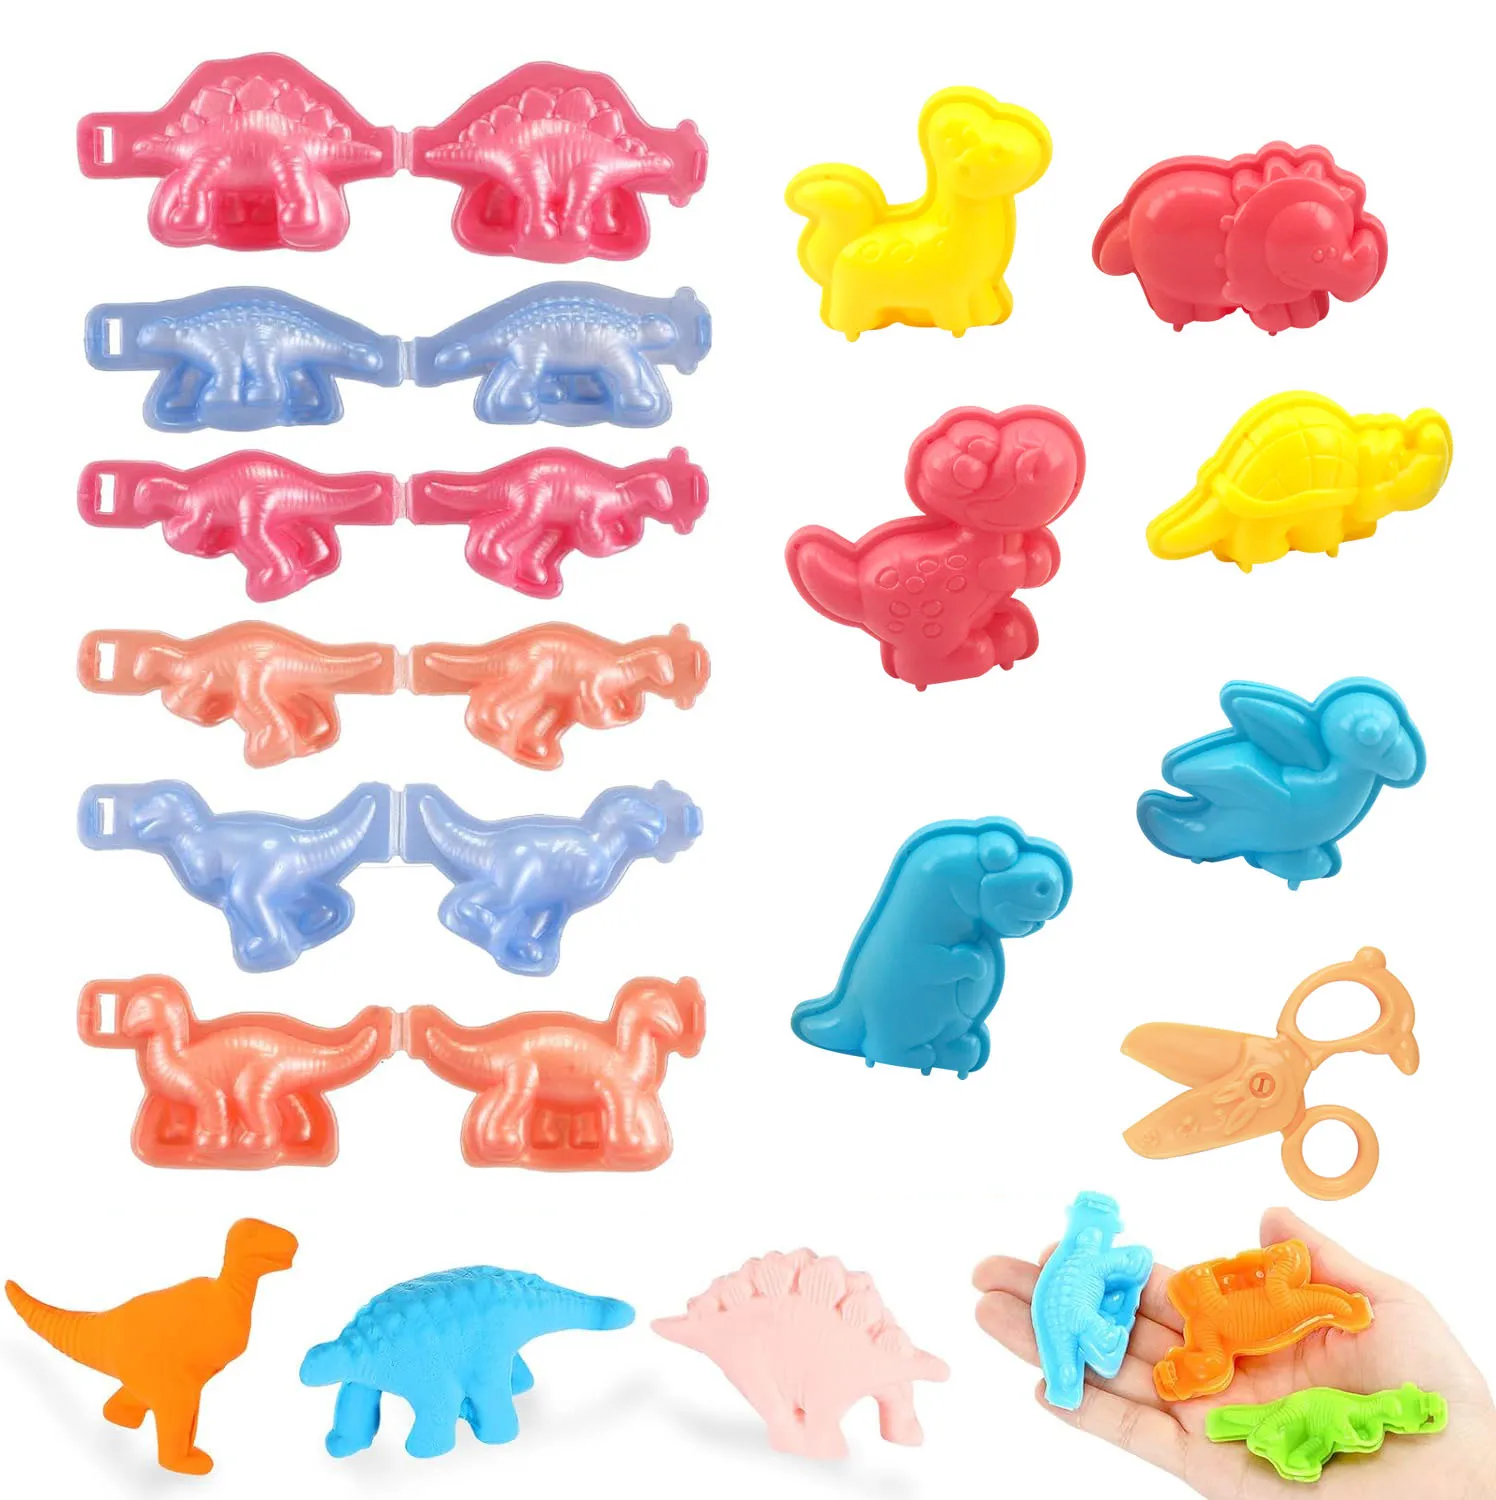 Cartoon Dinosaur World Dough Mold Set For Kids Play Dough Tools Plastic Molds Kits Children DIY Craft Toys Presents Party Favors